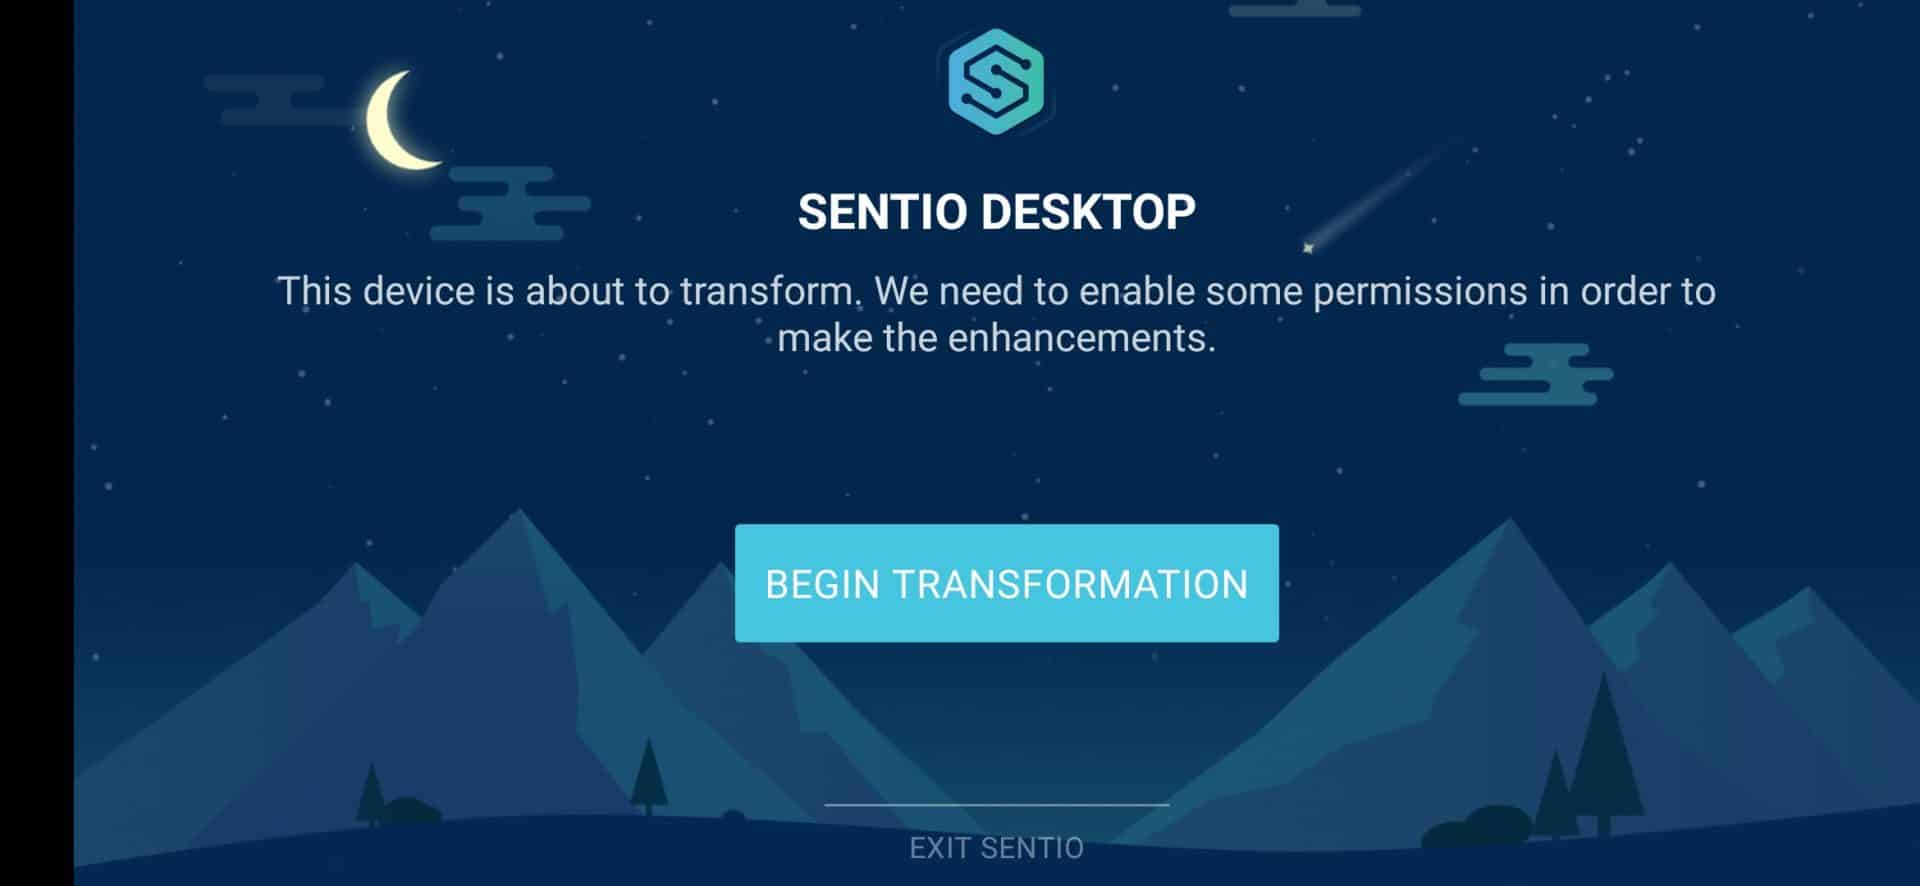 Using Sentio Desktop